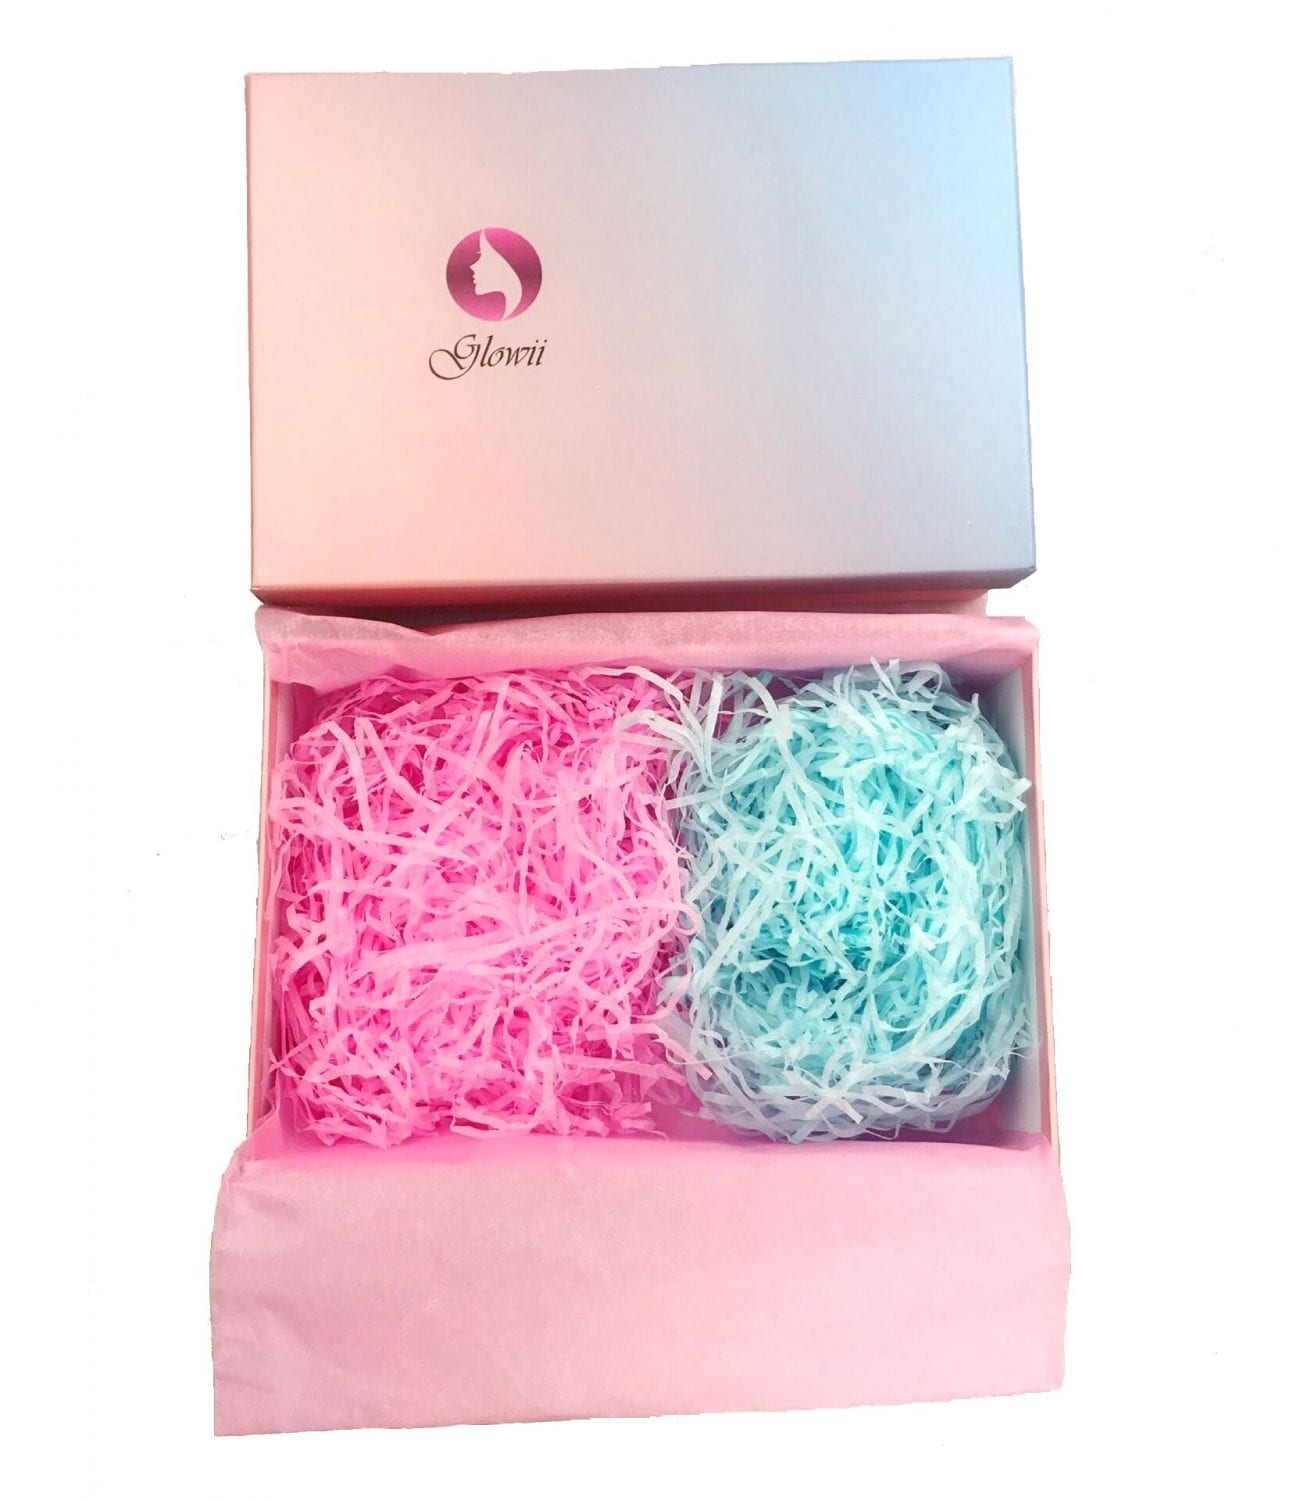 Glowii Gift Box with Shredded Tissue Paper – Medium